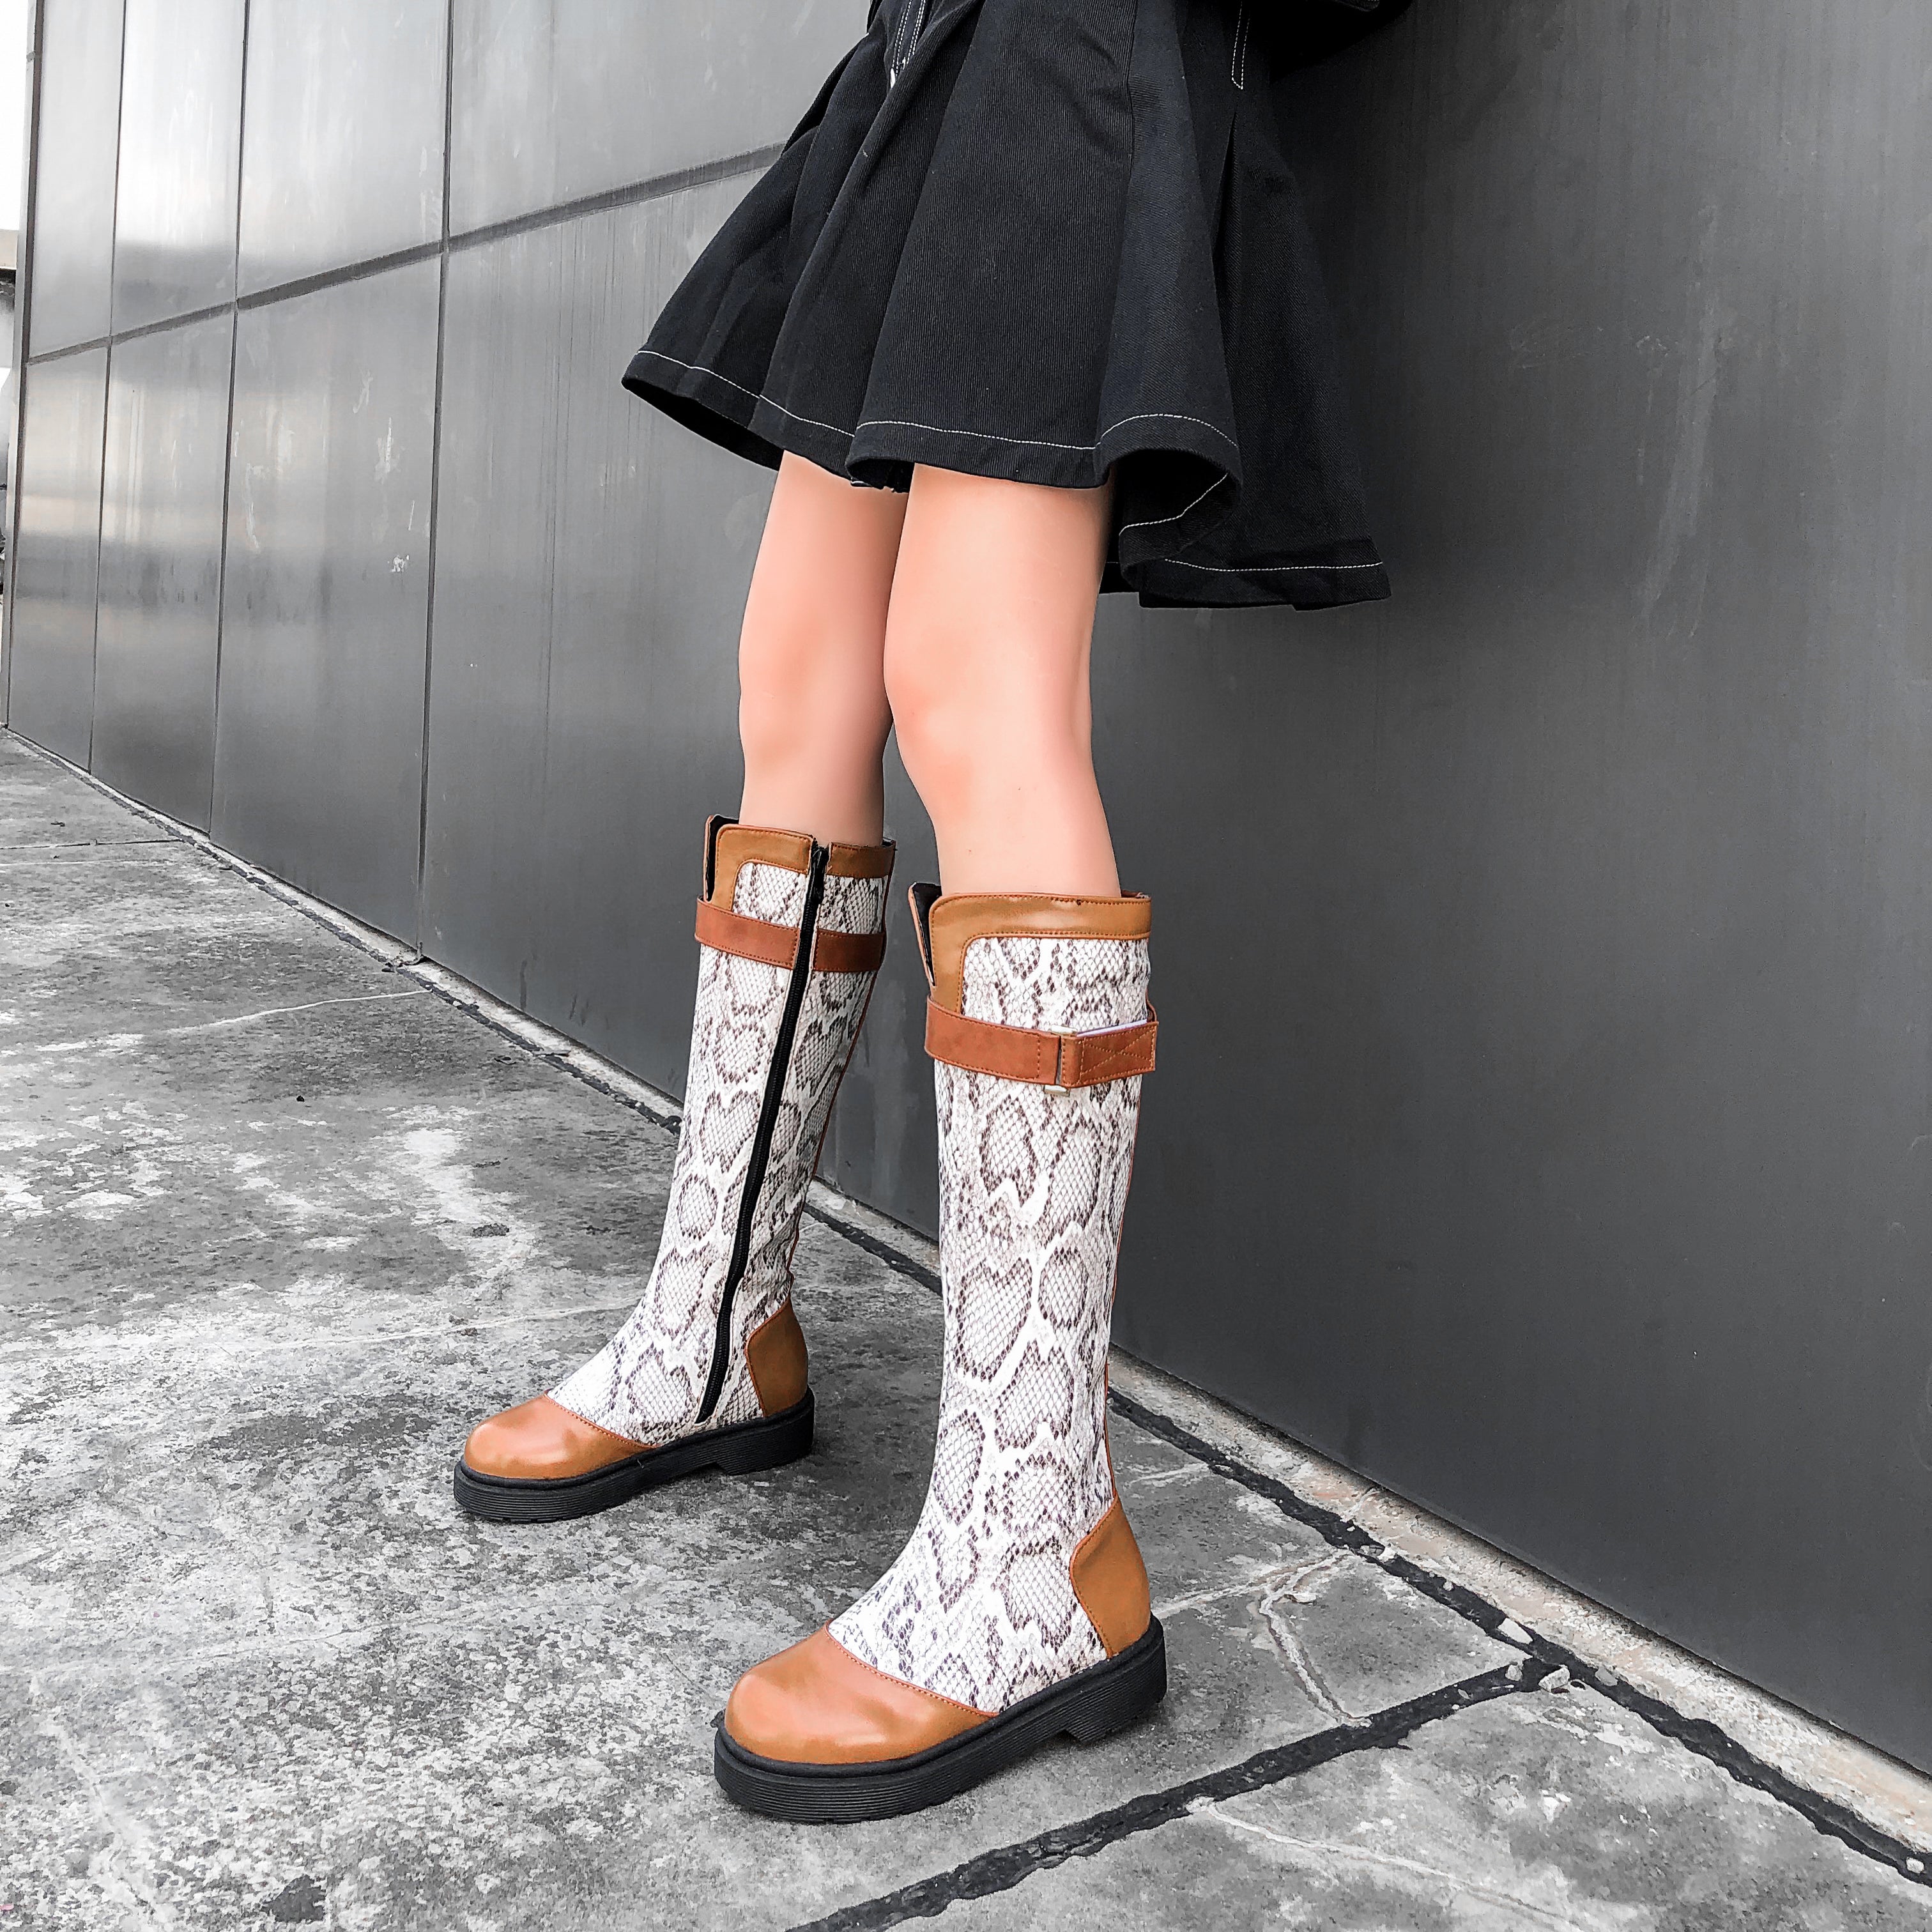 Bigsizeheels Round toe flat side zipper boots - Brown freeshipping - bigsizeheel®-size5-size15 -All Plus Sizes Available!